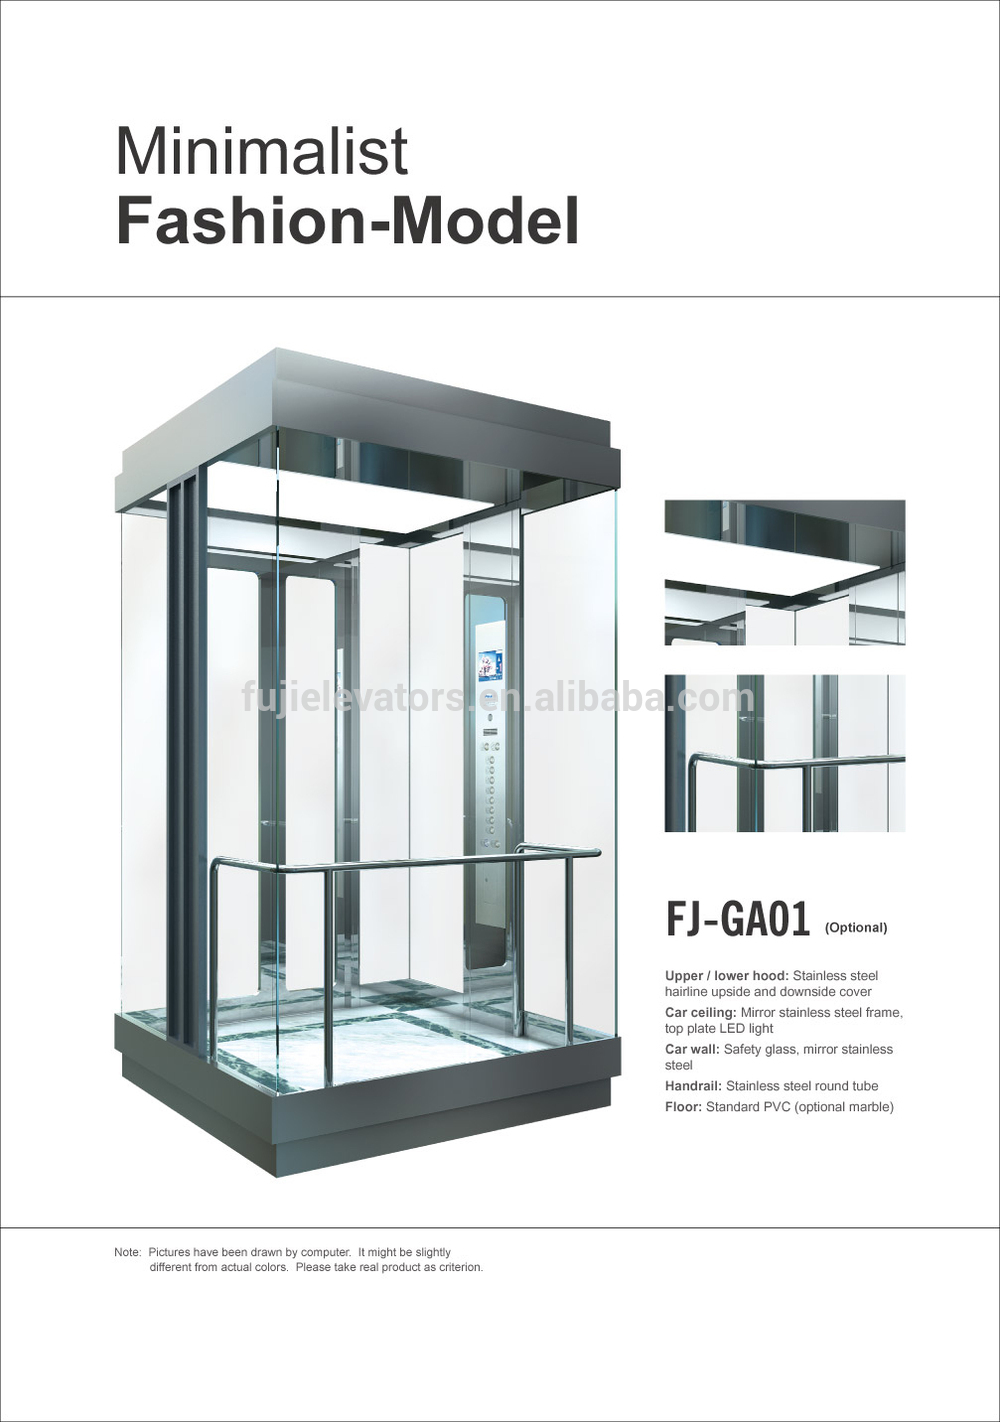 FUJI Panoramic elevator (All glass square type)